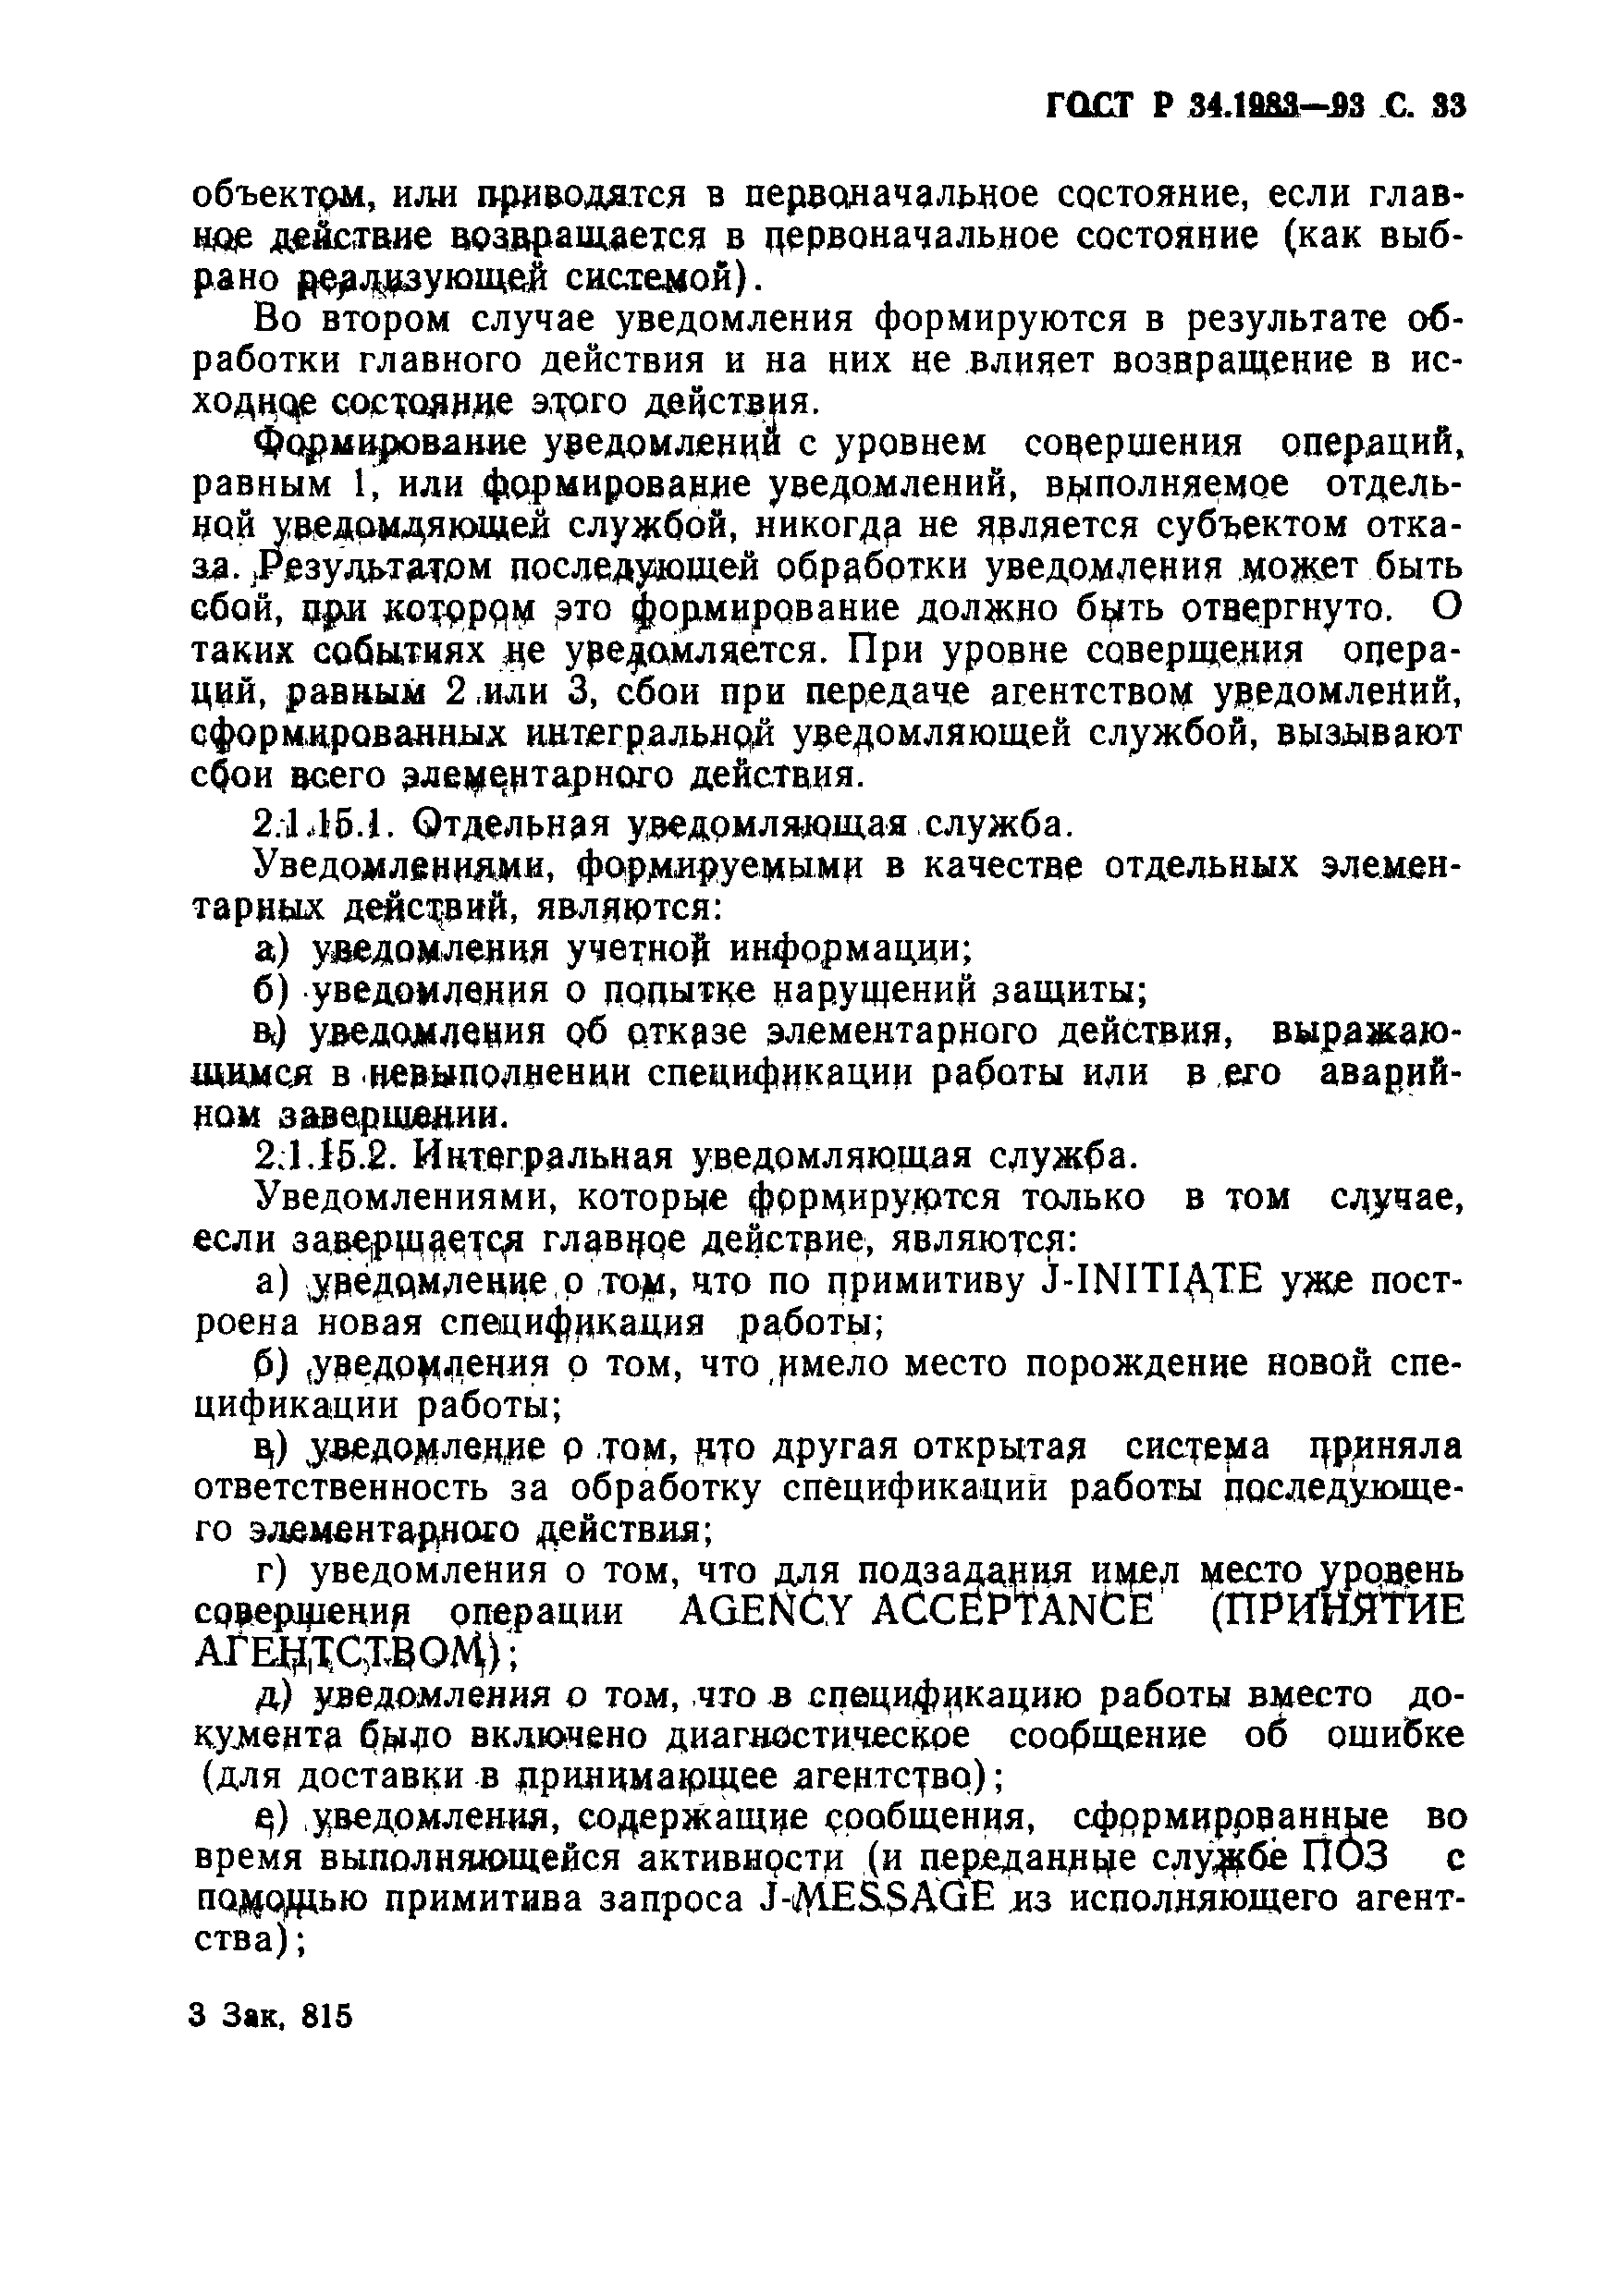 ГОСТ Р 34.1983-93. Страница 34